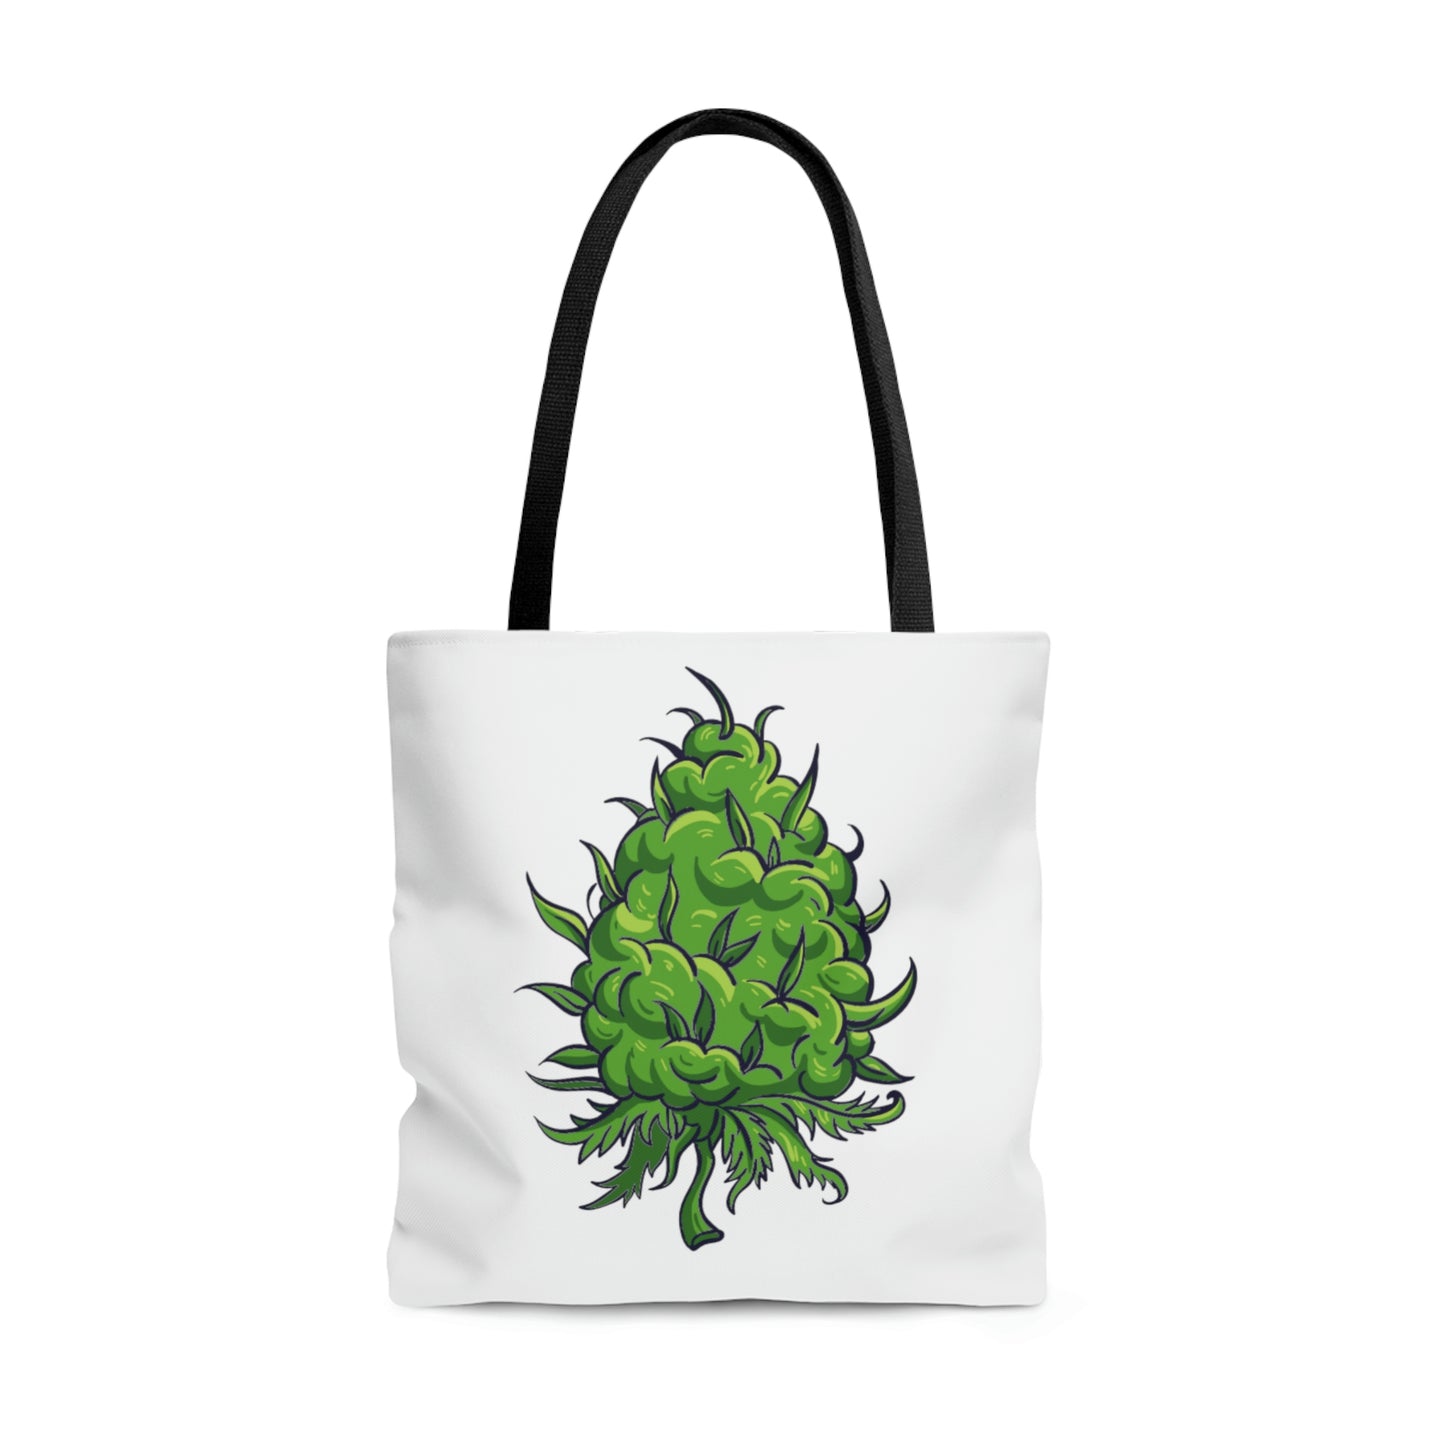 The Big Green Cannabis Nug Mary Jane Tote Bag with black handles